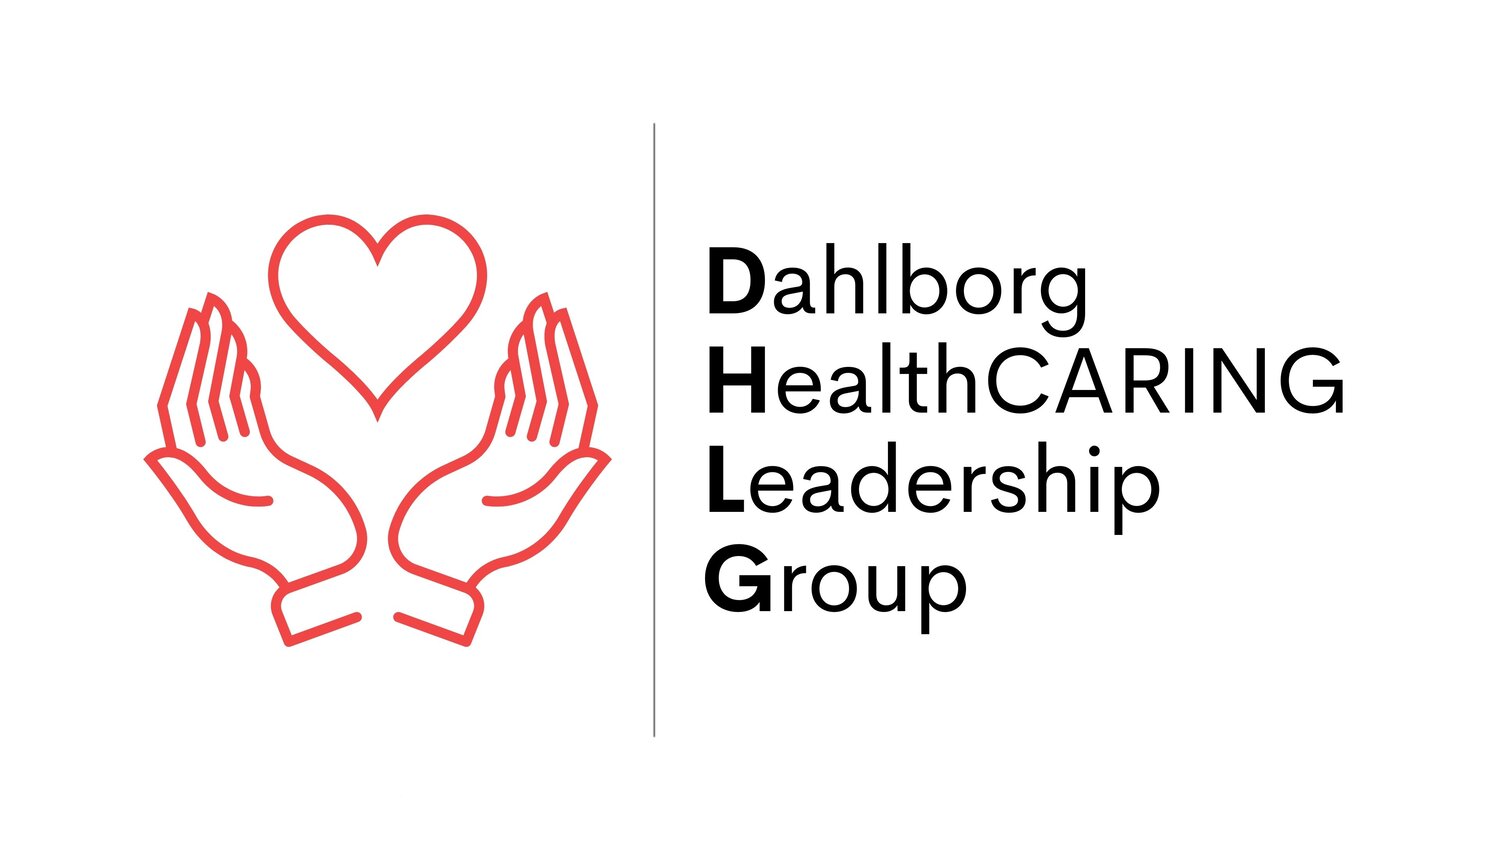 Dahlborg HealthCARING Leadership Group